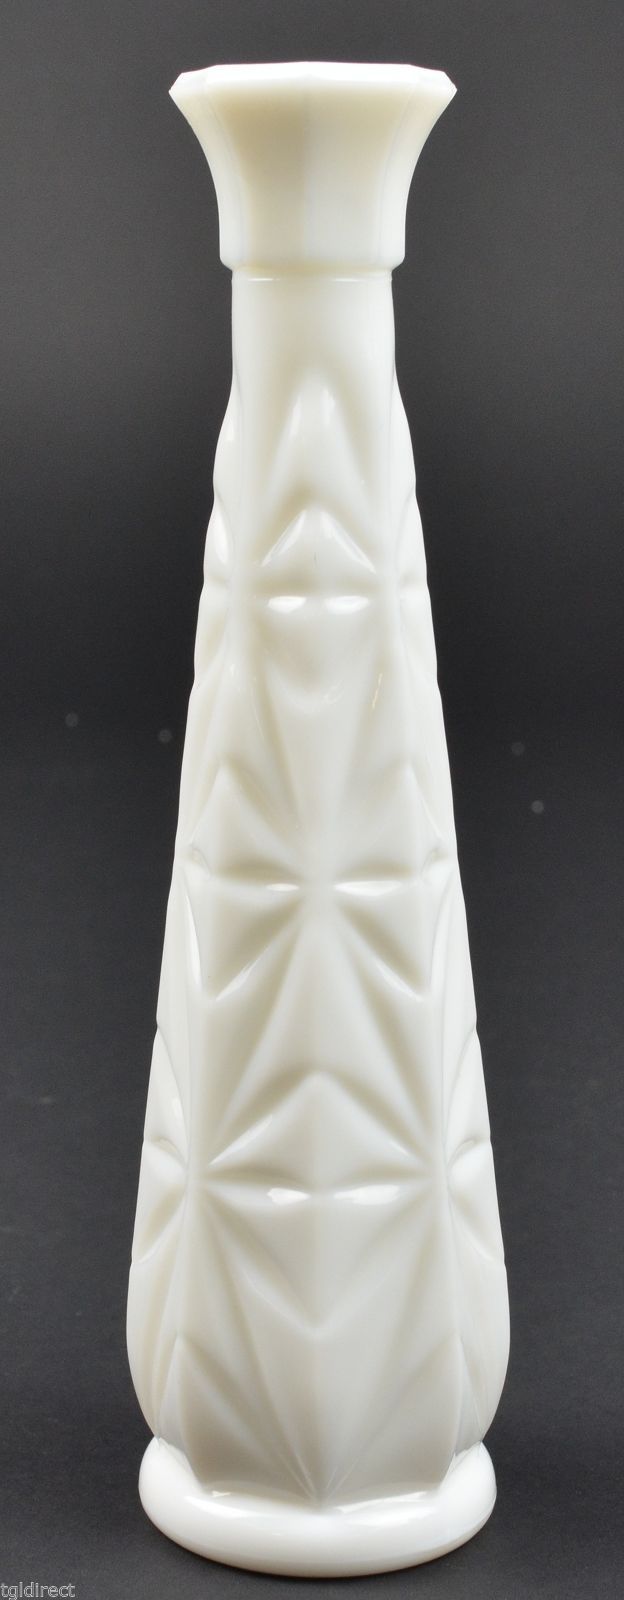 Primary image for Vintage Hoosier Starburst Milk Glass Pattern Bud Vase 9" Tall Collectible Decor